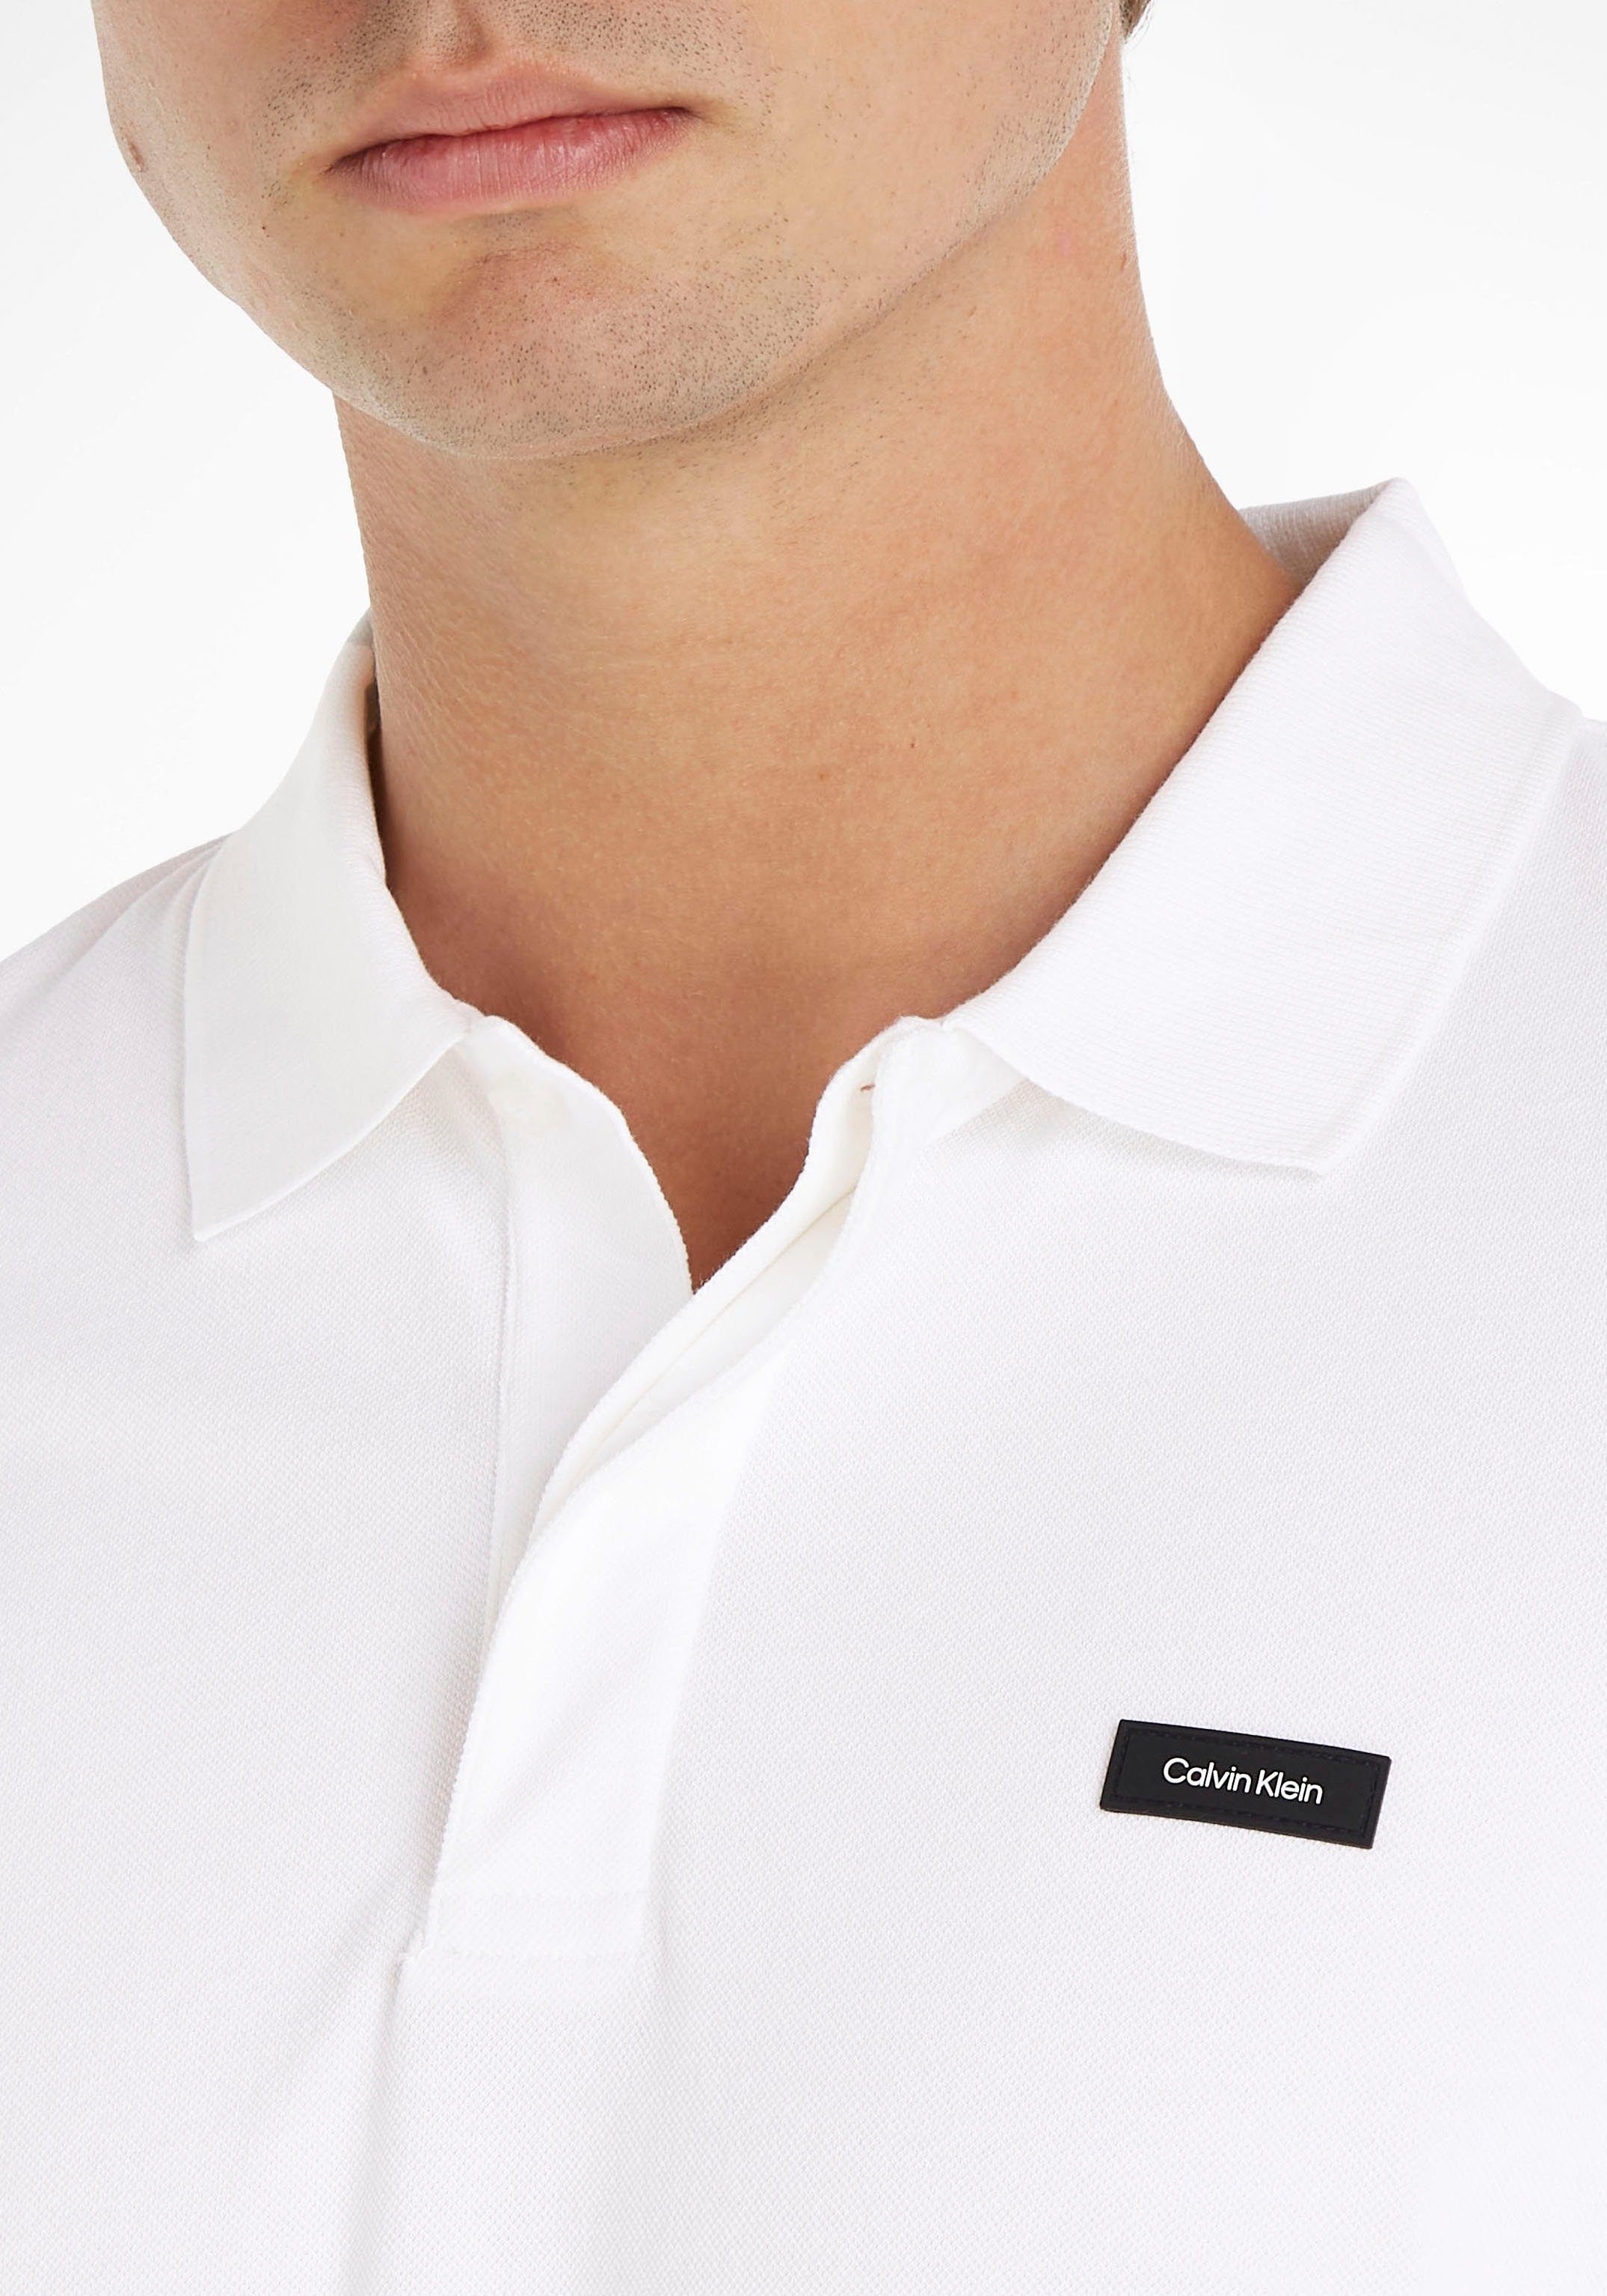 LS knopflosem STRETCH White mit Poloshirt Polokragen POLO Calvin Klein PIQUE Bright